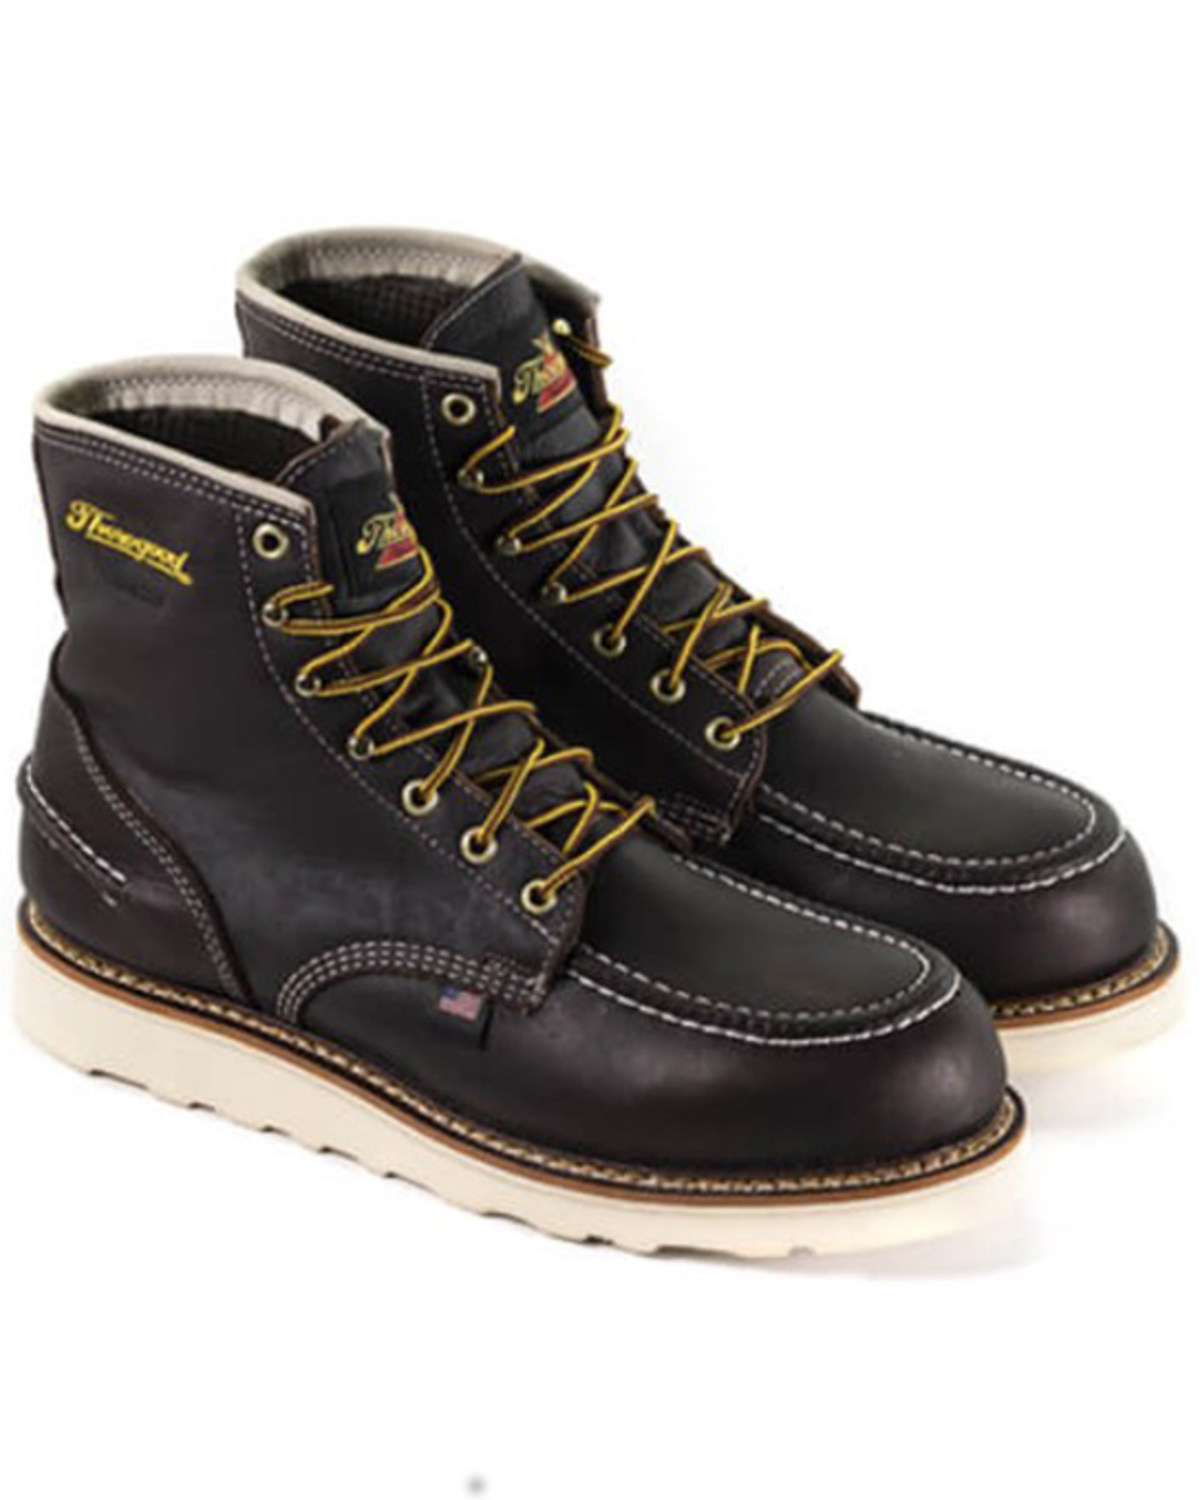 Thorogood Men's 6" Briar Pitstop Waterproof Work Boots - Moc Toe